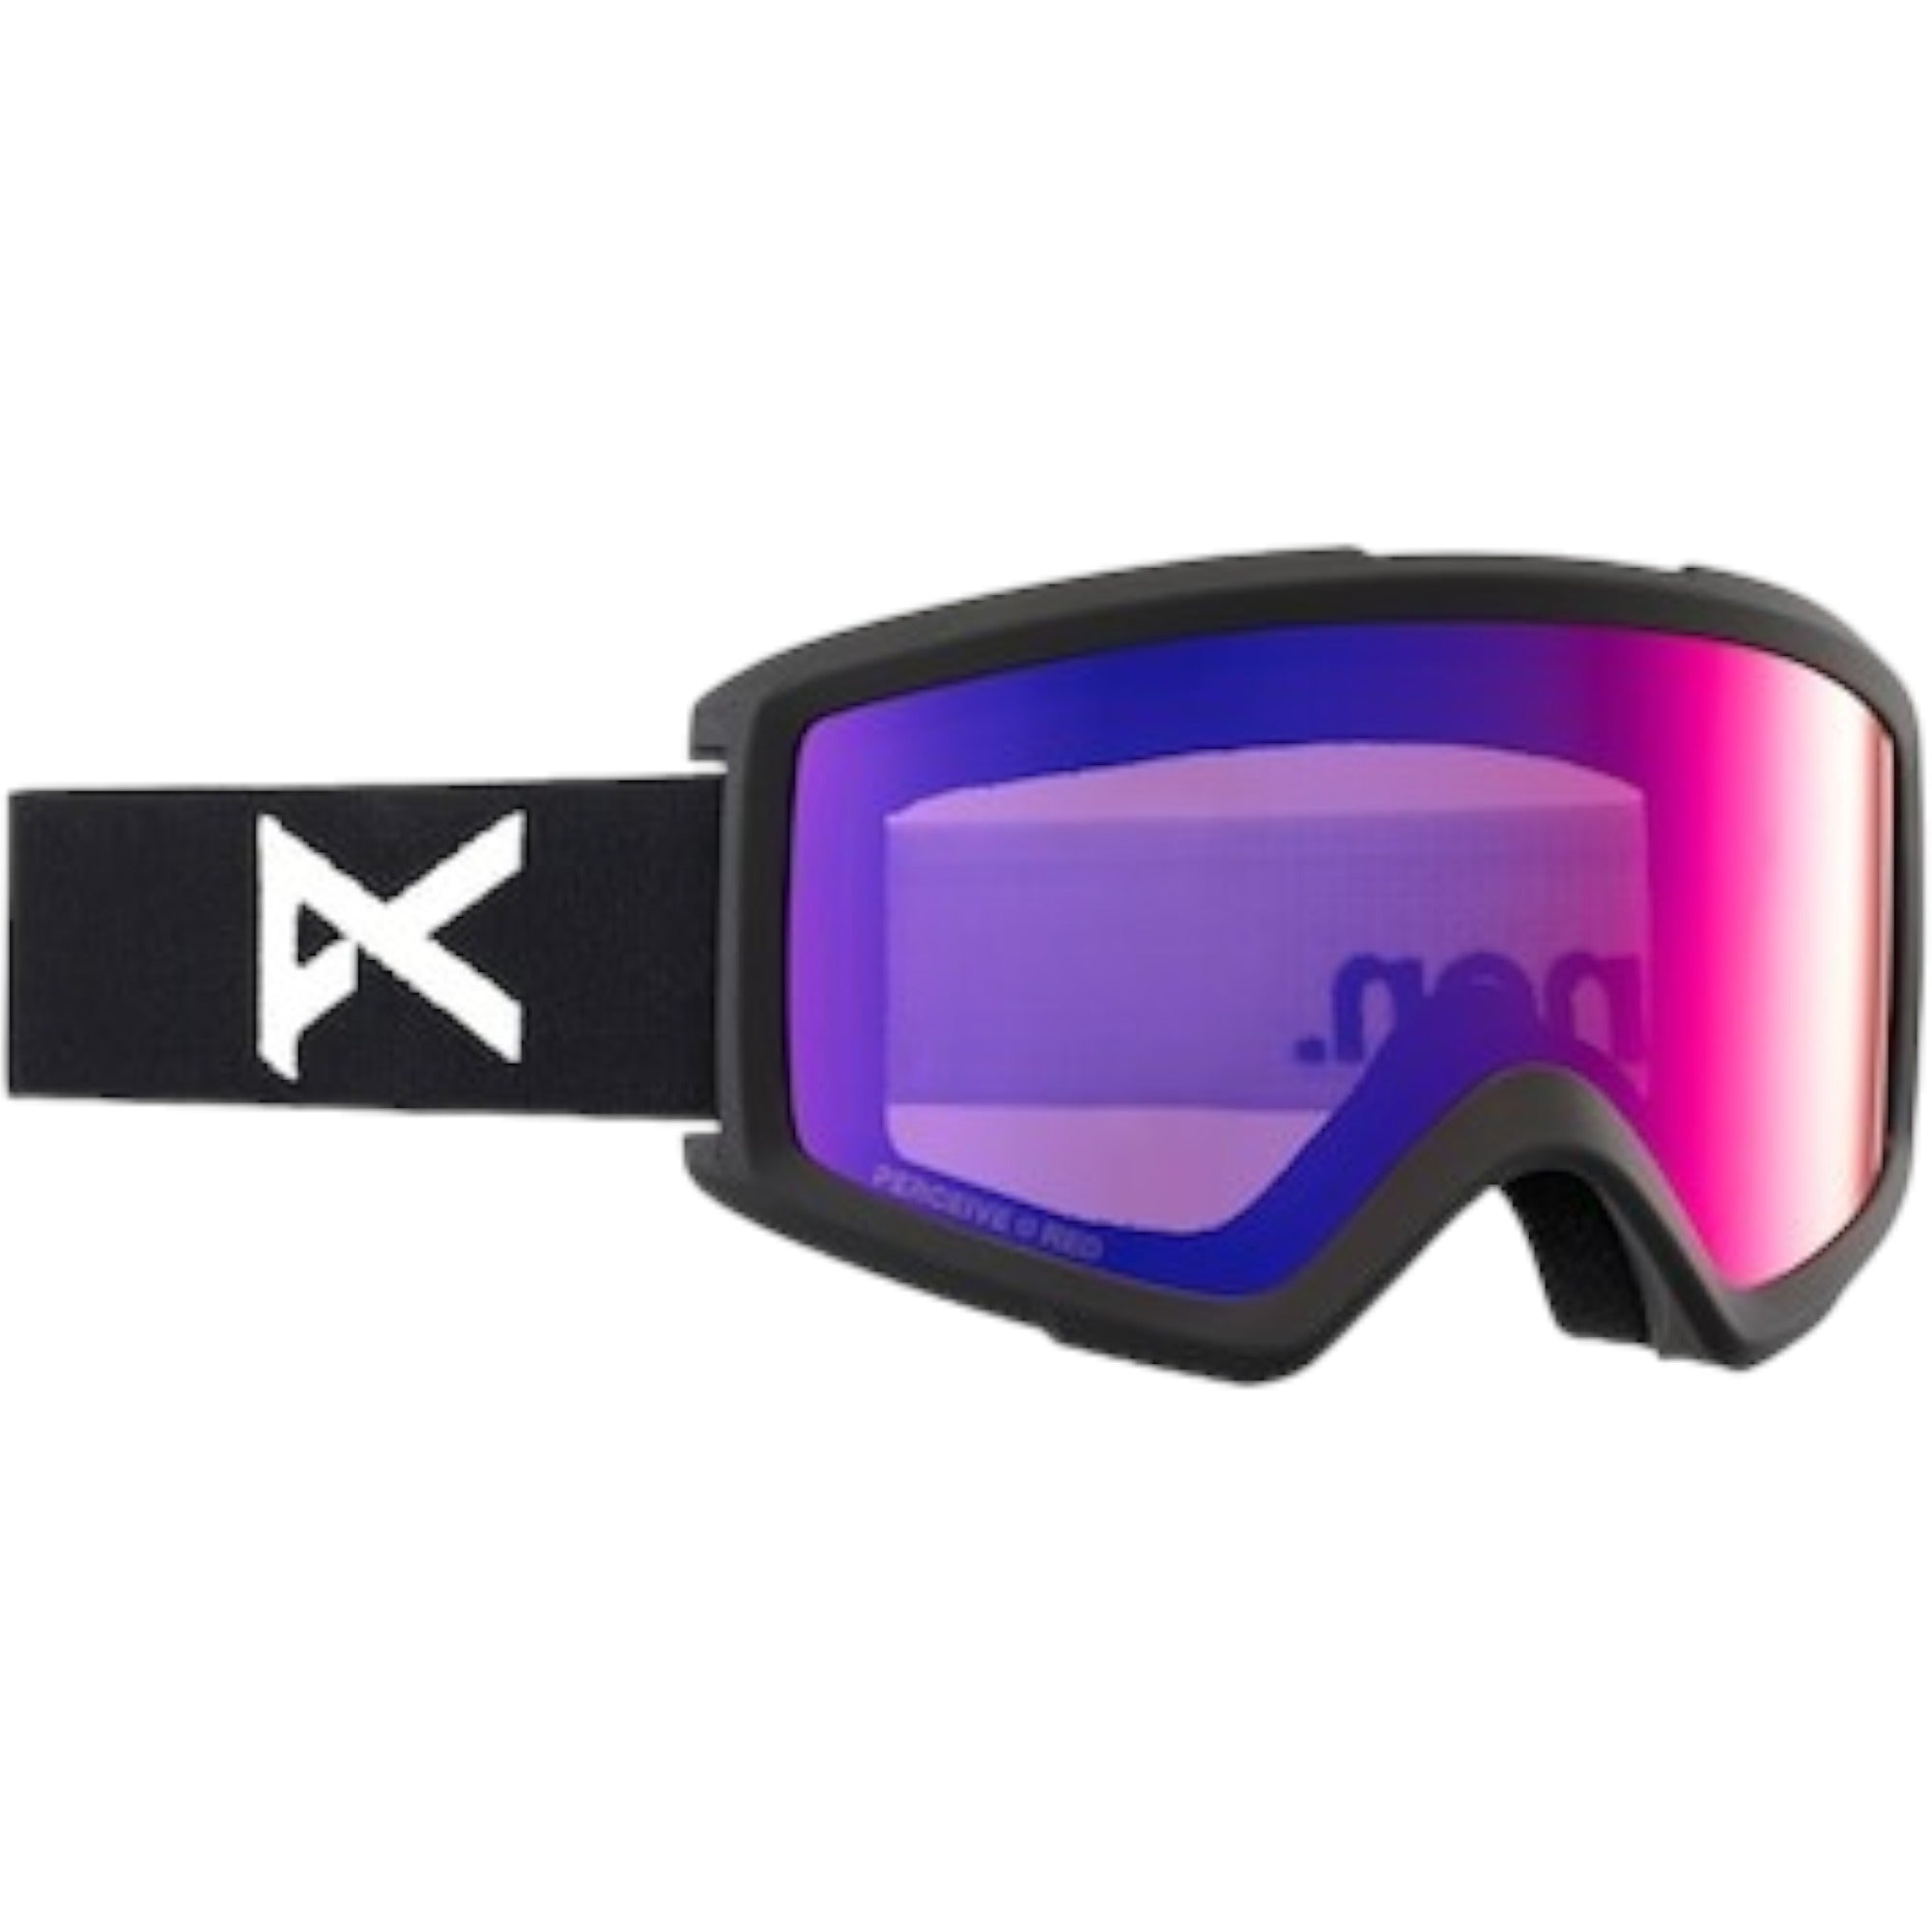 Helix 2.0 Adult Ski Goggles